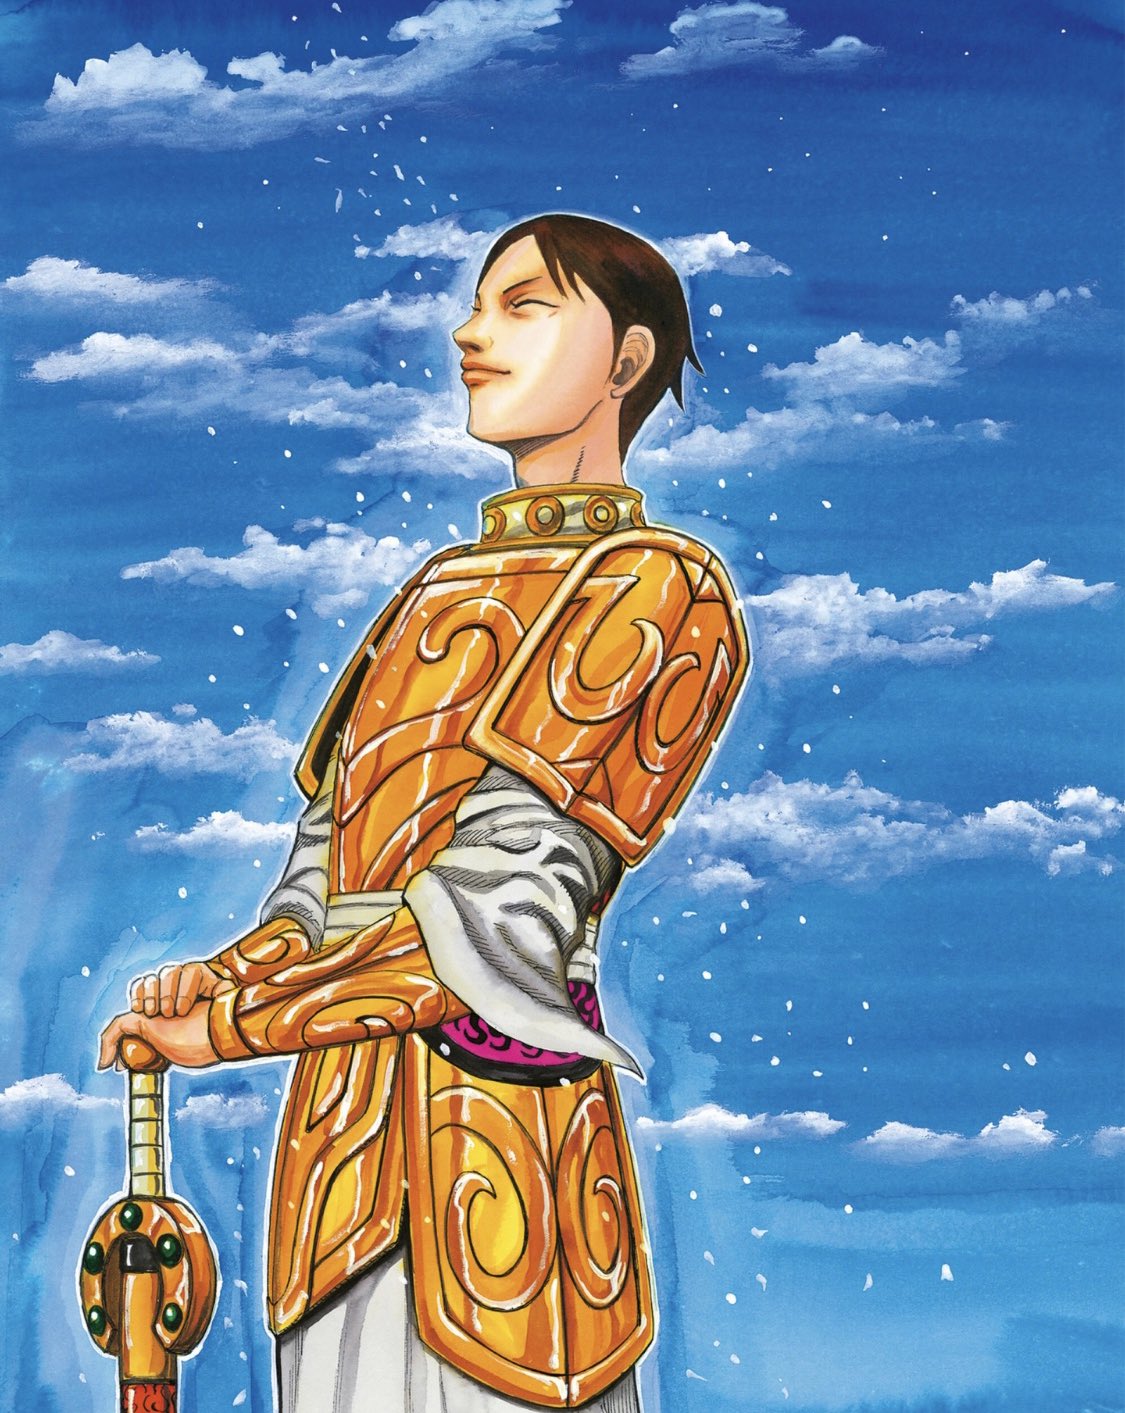 Kingdom 4 – 22 - Lost in Anime